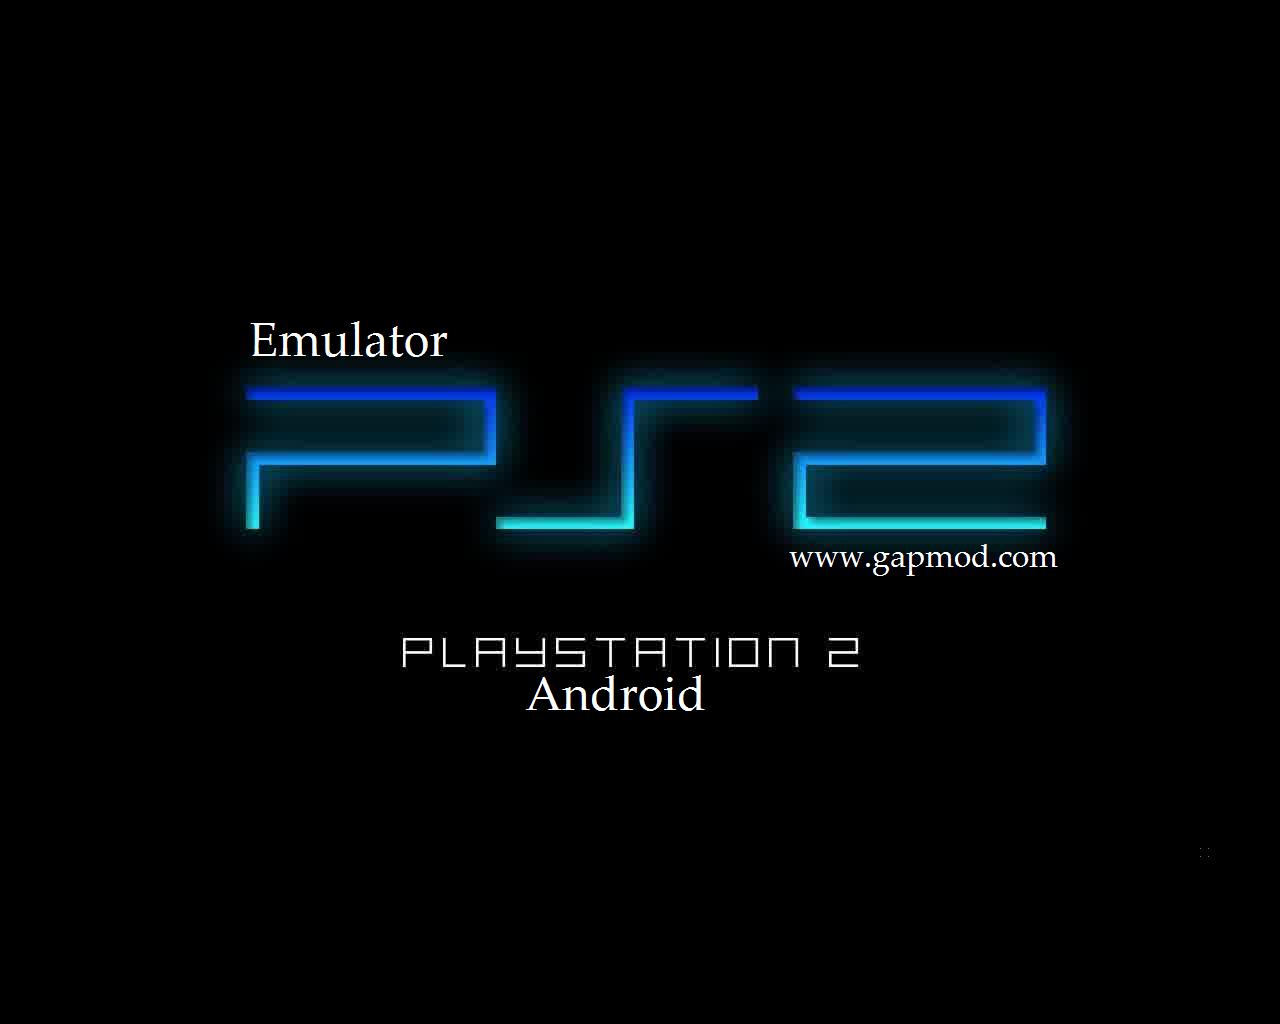 Playstation 2 emulator for pc zip download : buovourig